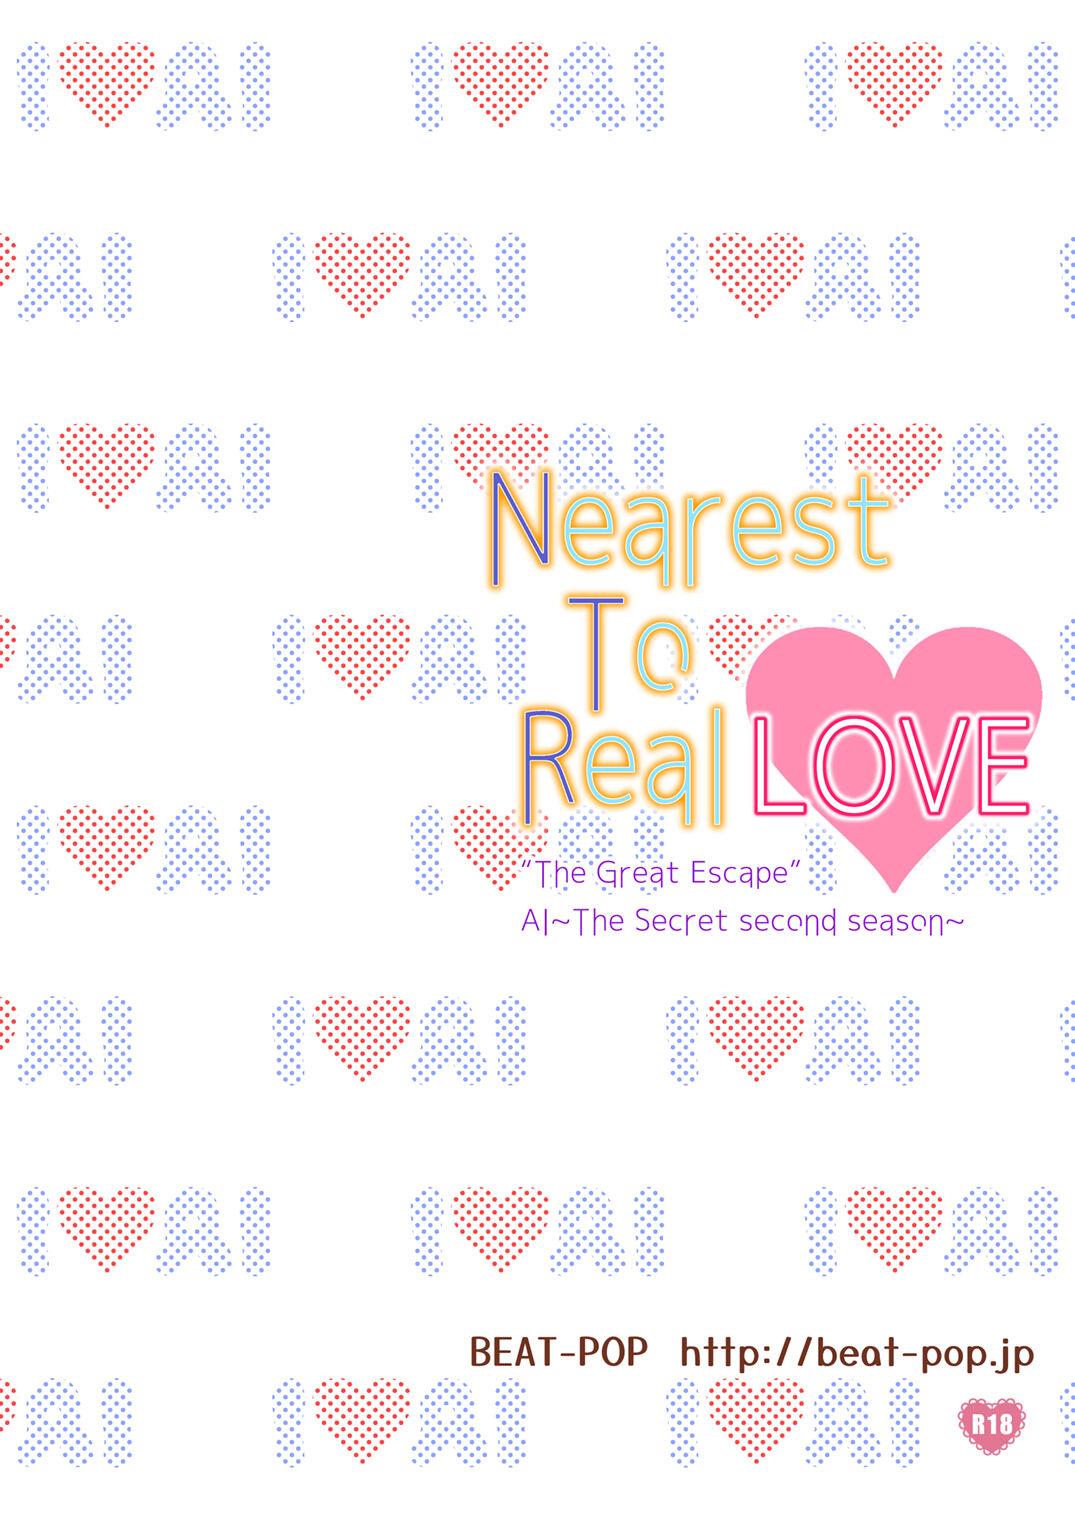 Nearest To Real LOVE “The Great Escape” Al 35